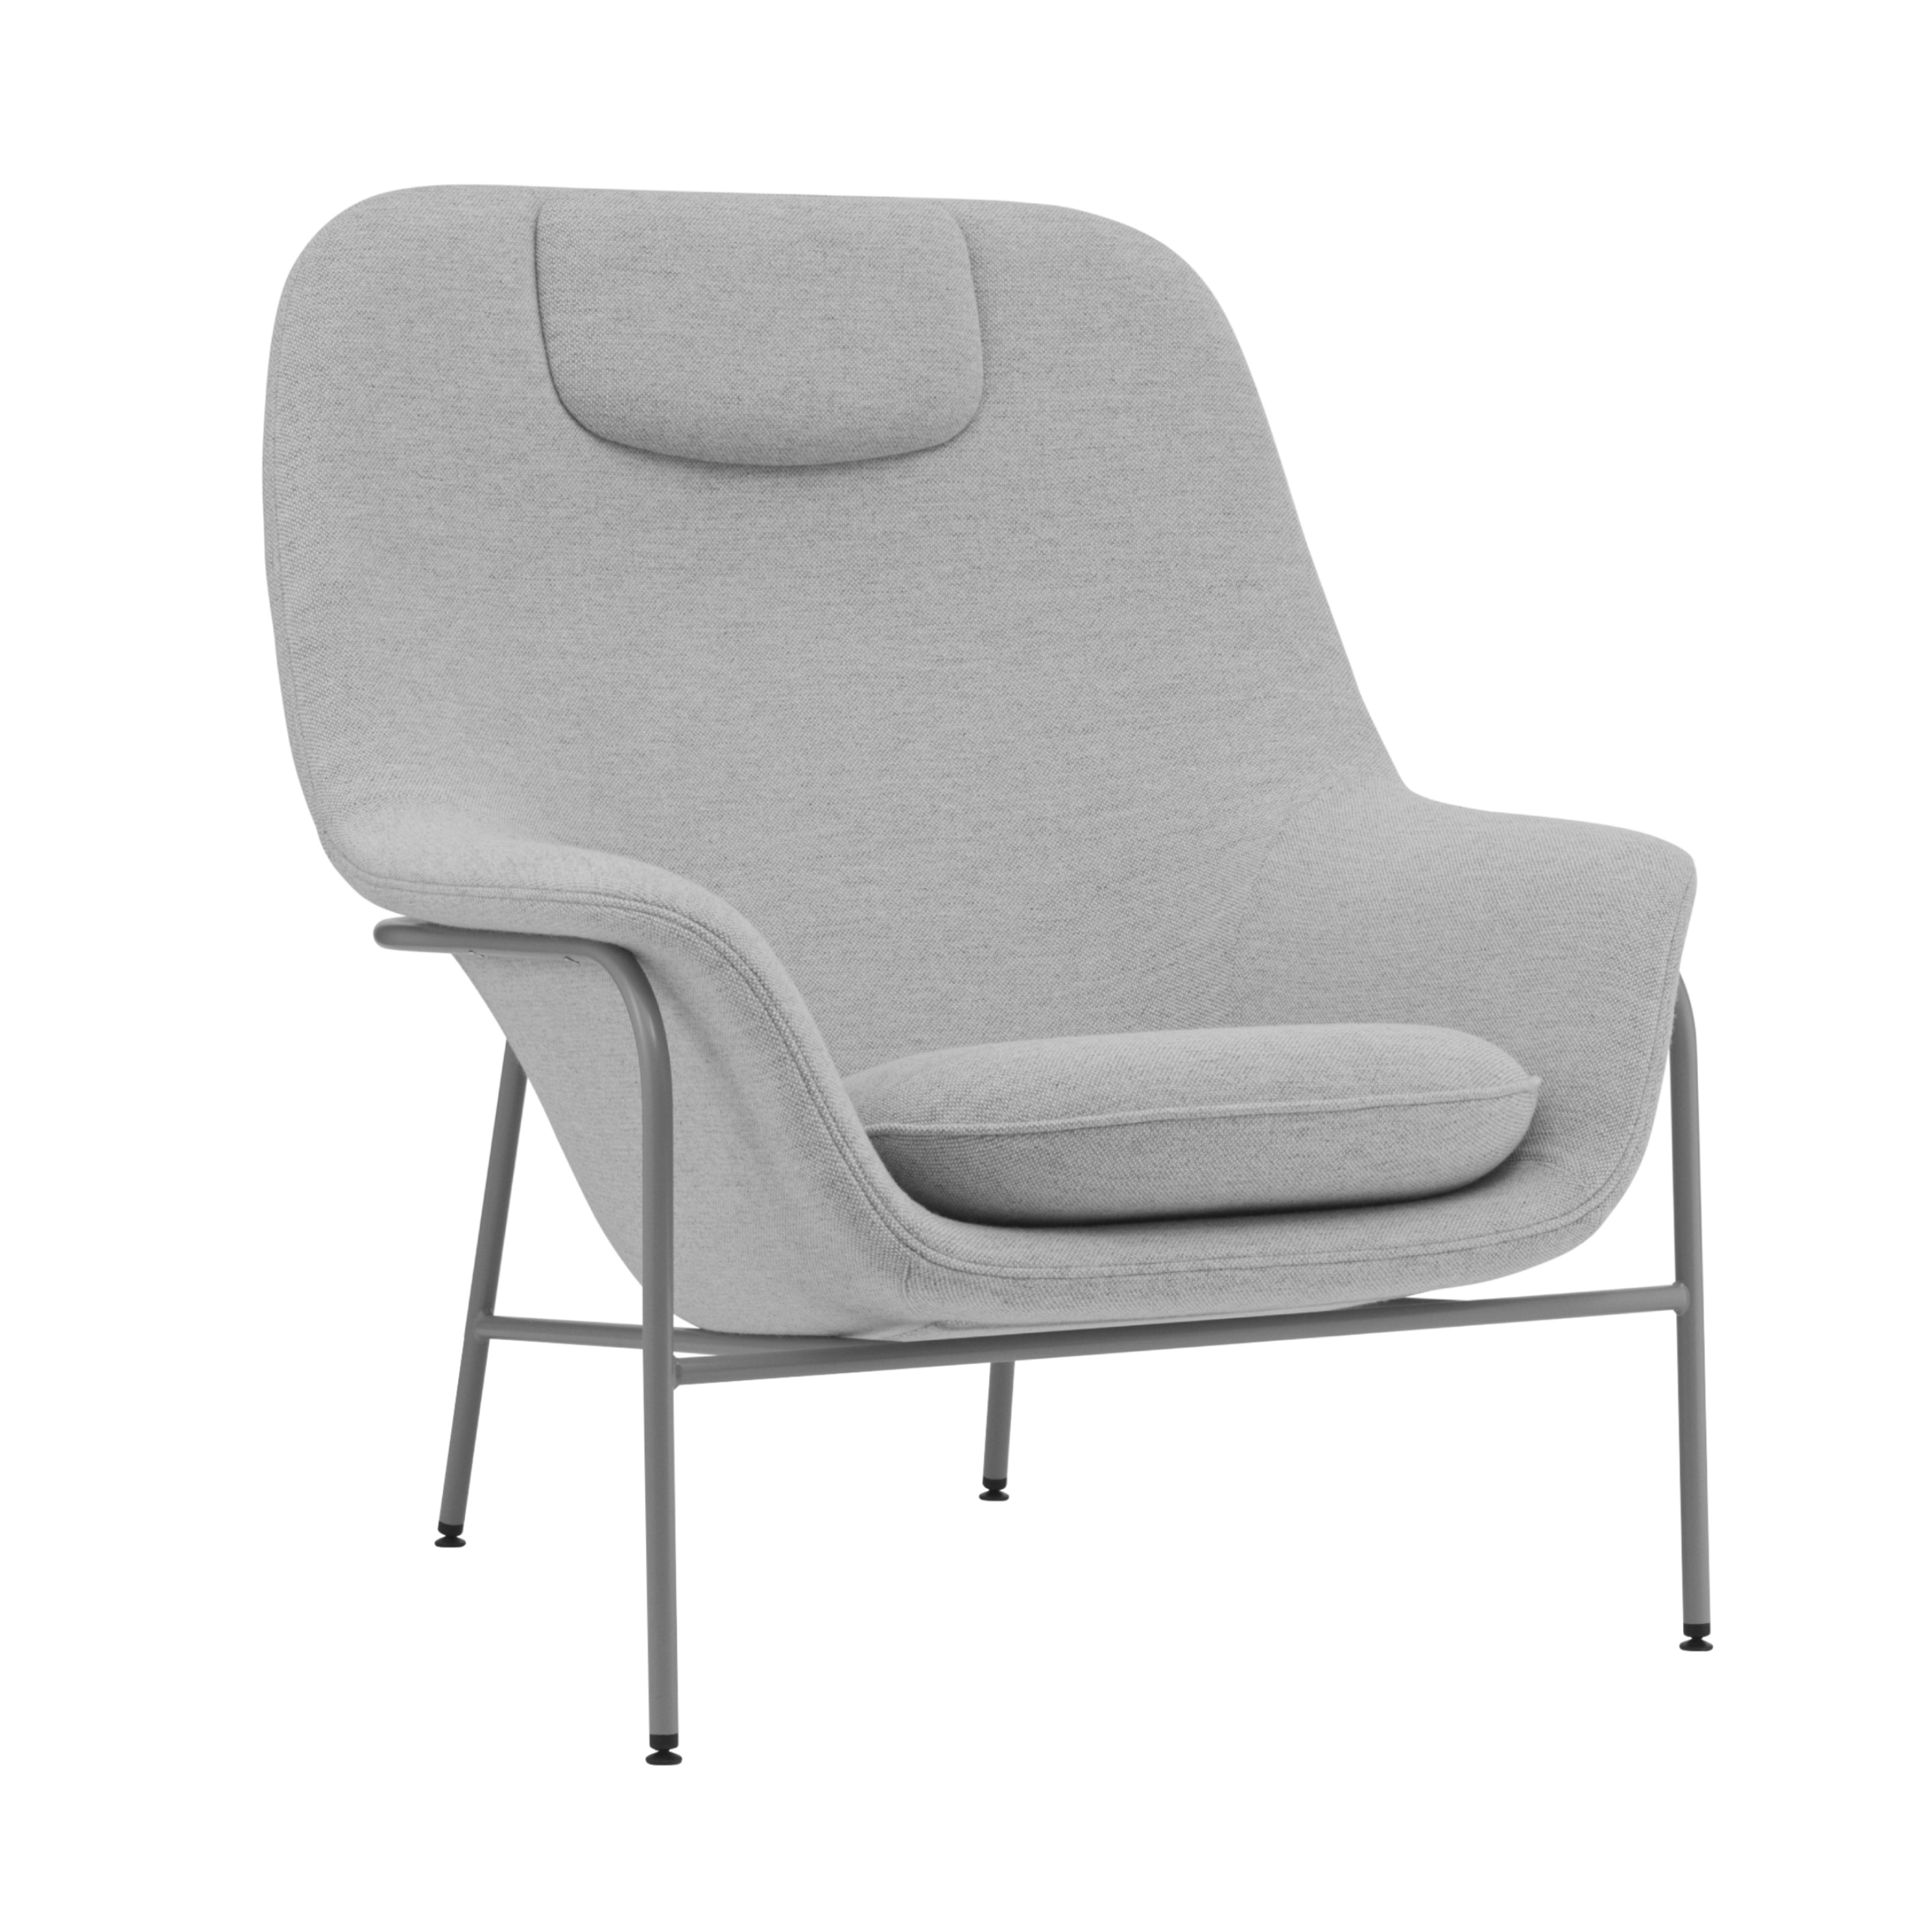 Drape Lounge Chair: High + Steel Base + With Headrest + Grey